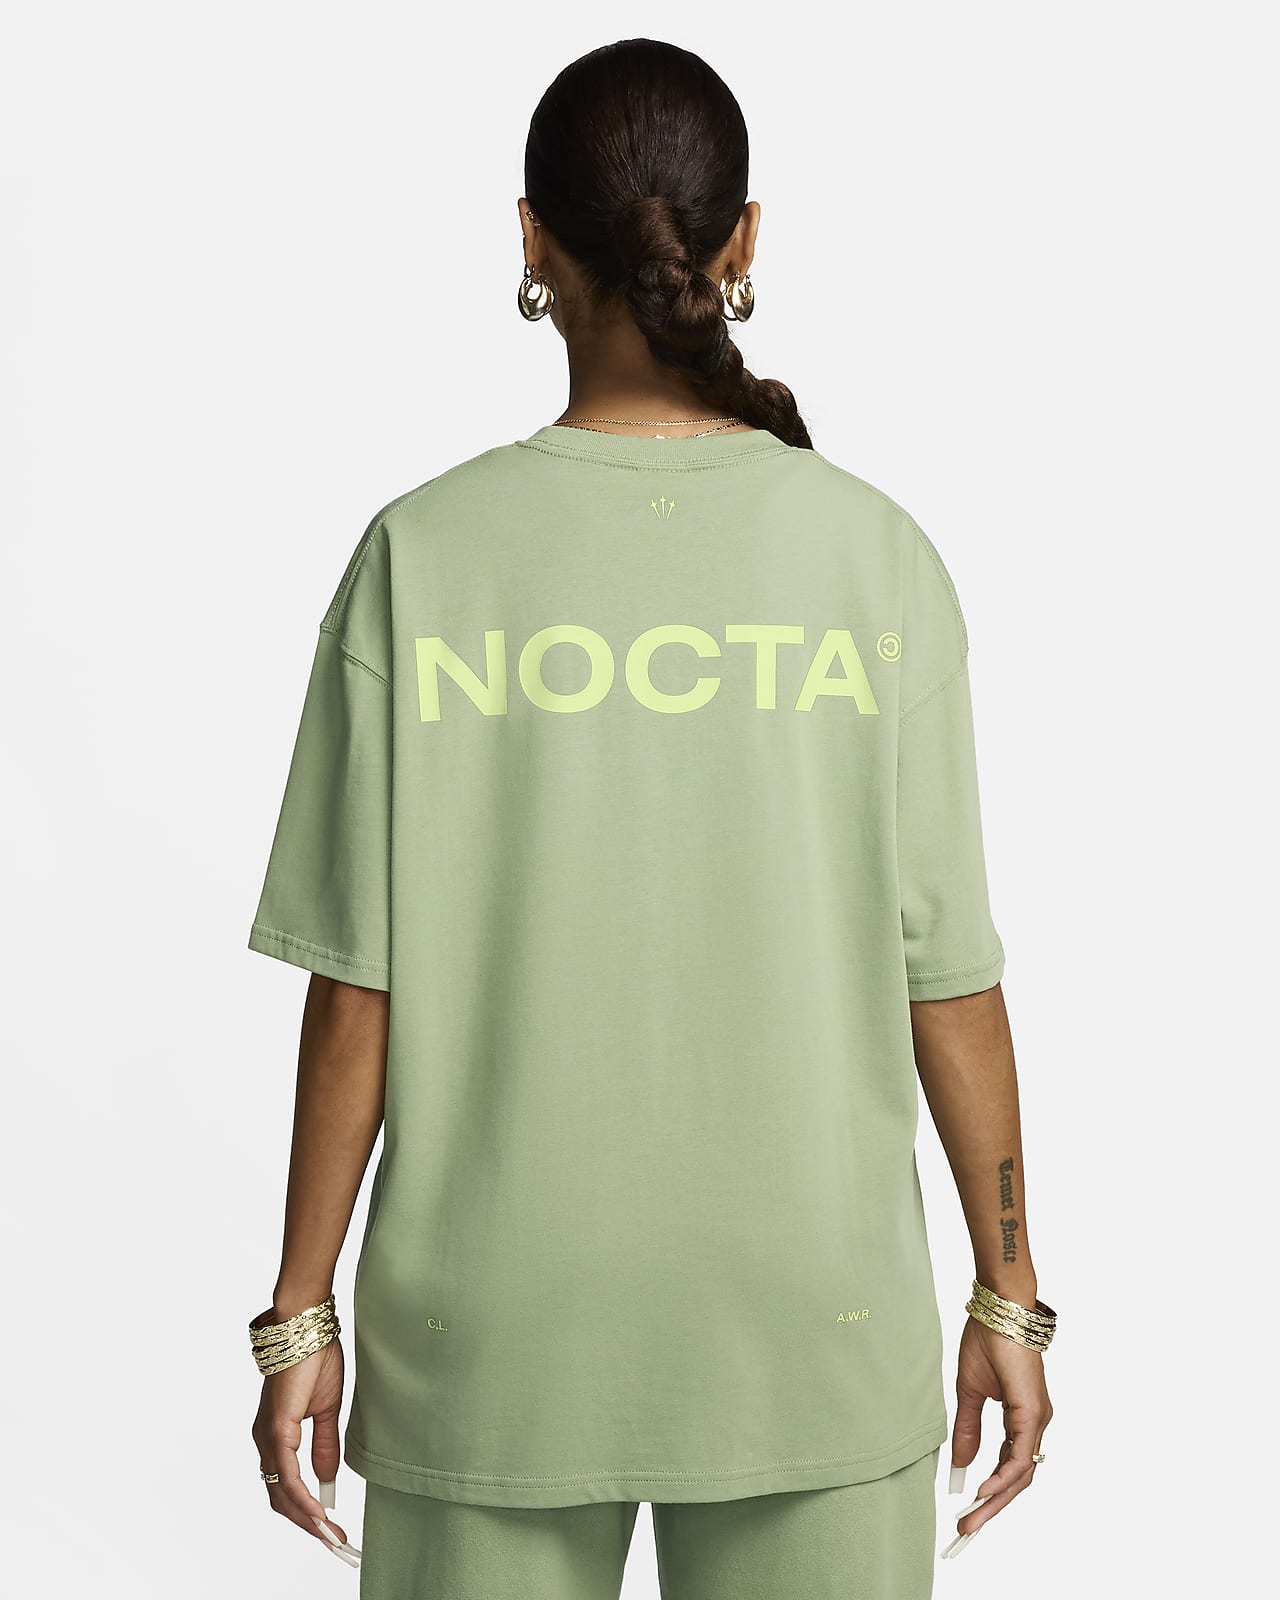 NOCTA NOCTA ビッグ ボディ CS Tシャツ